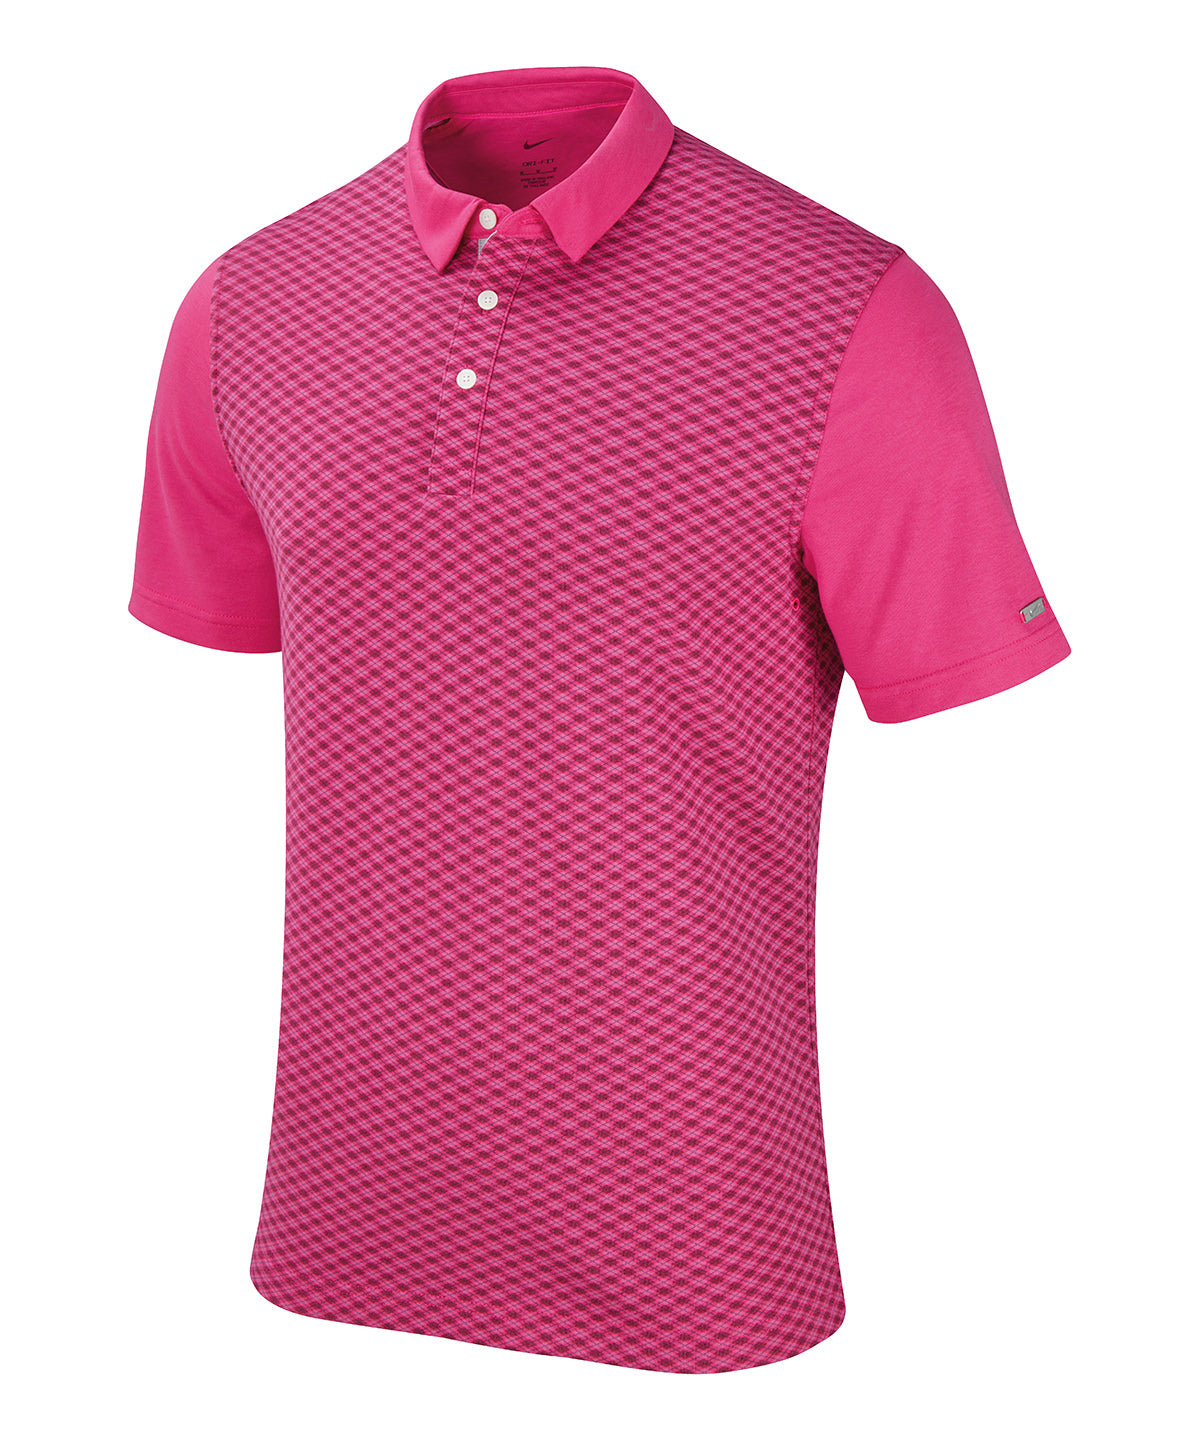 Personalised Polo Shirts - Bright Pink Nike Nike Player argyle print polo